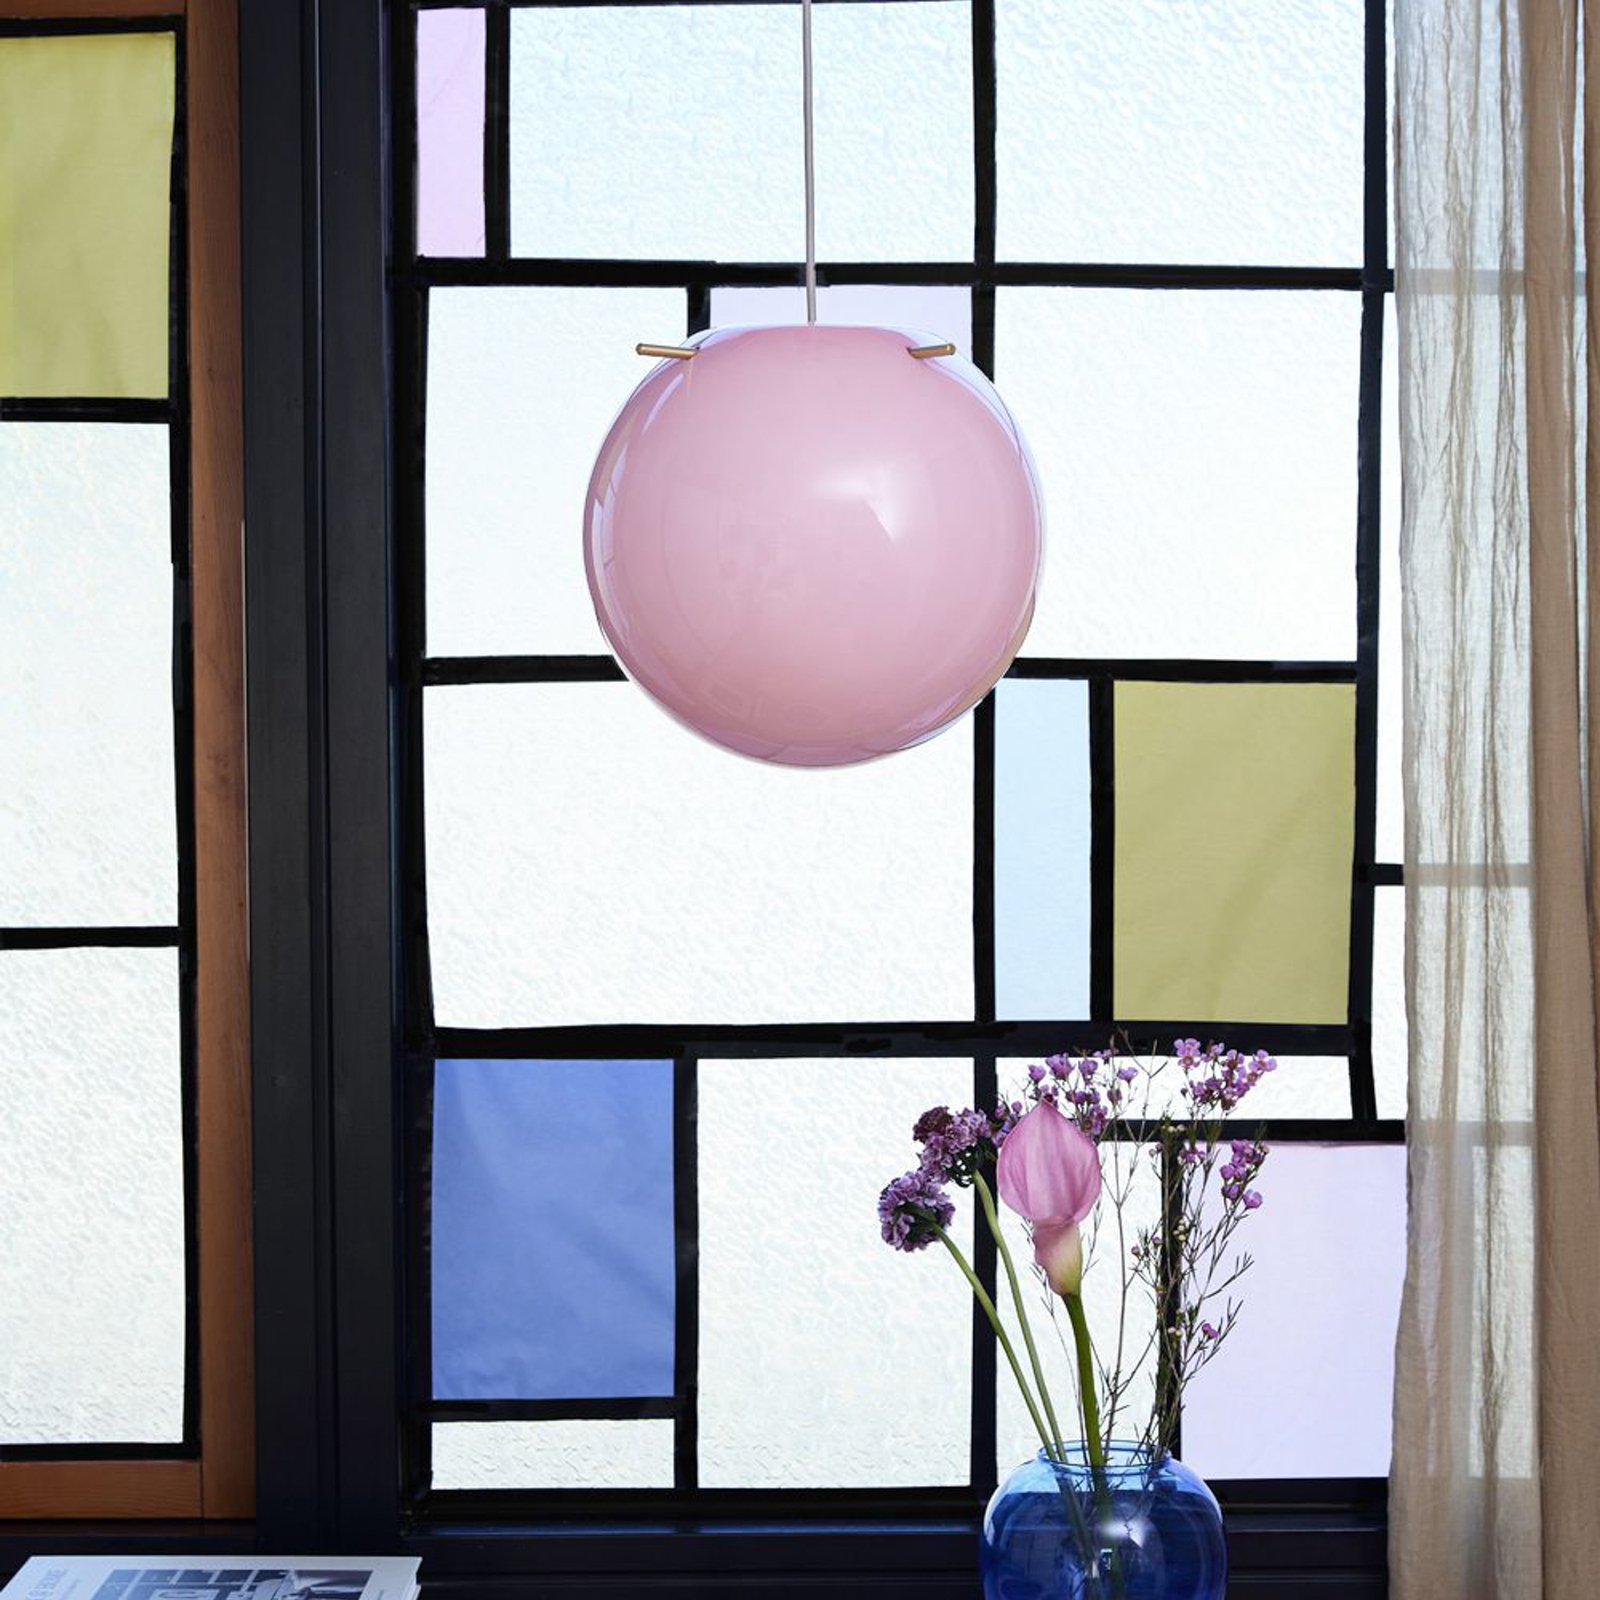 FRANDSEN hanglamp Koi, glas, roos/messing, Ø 32 cm